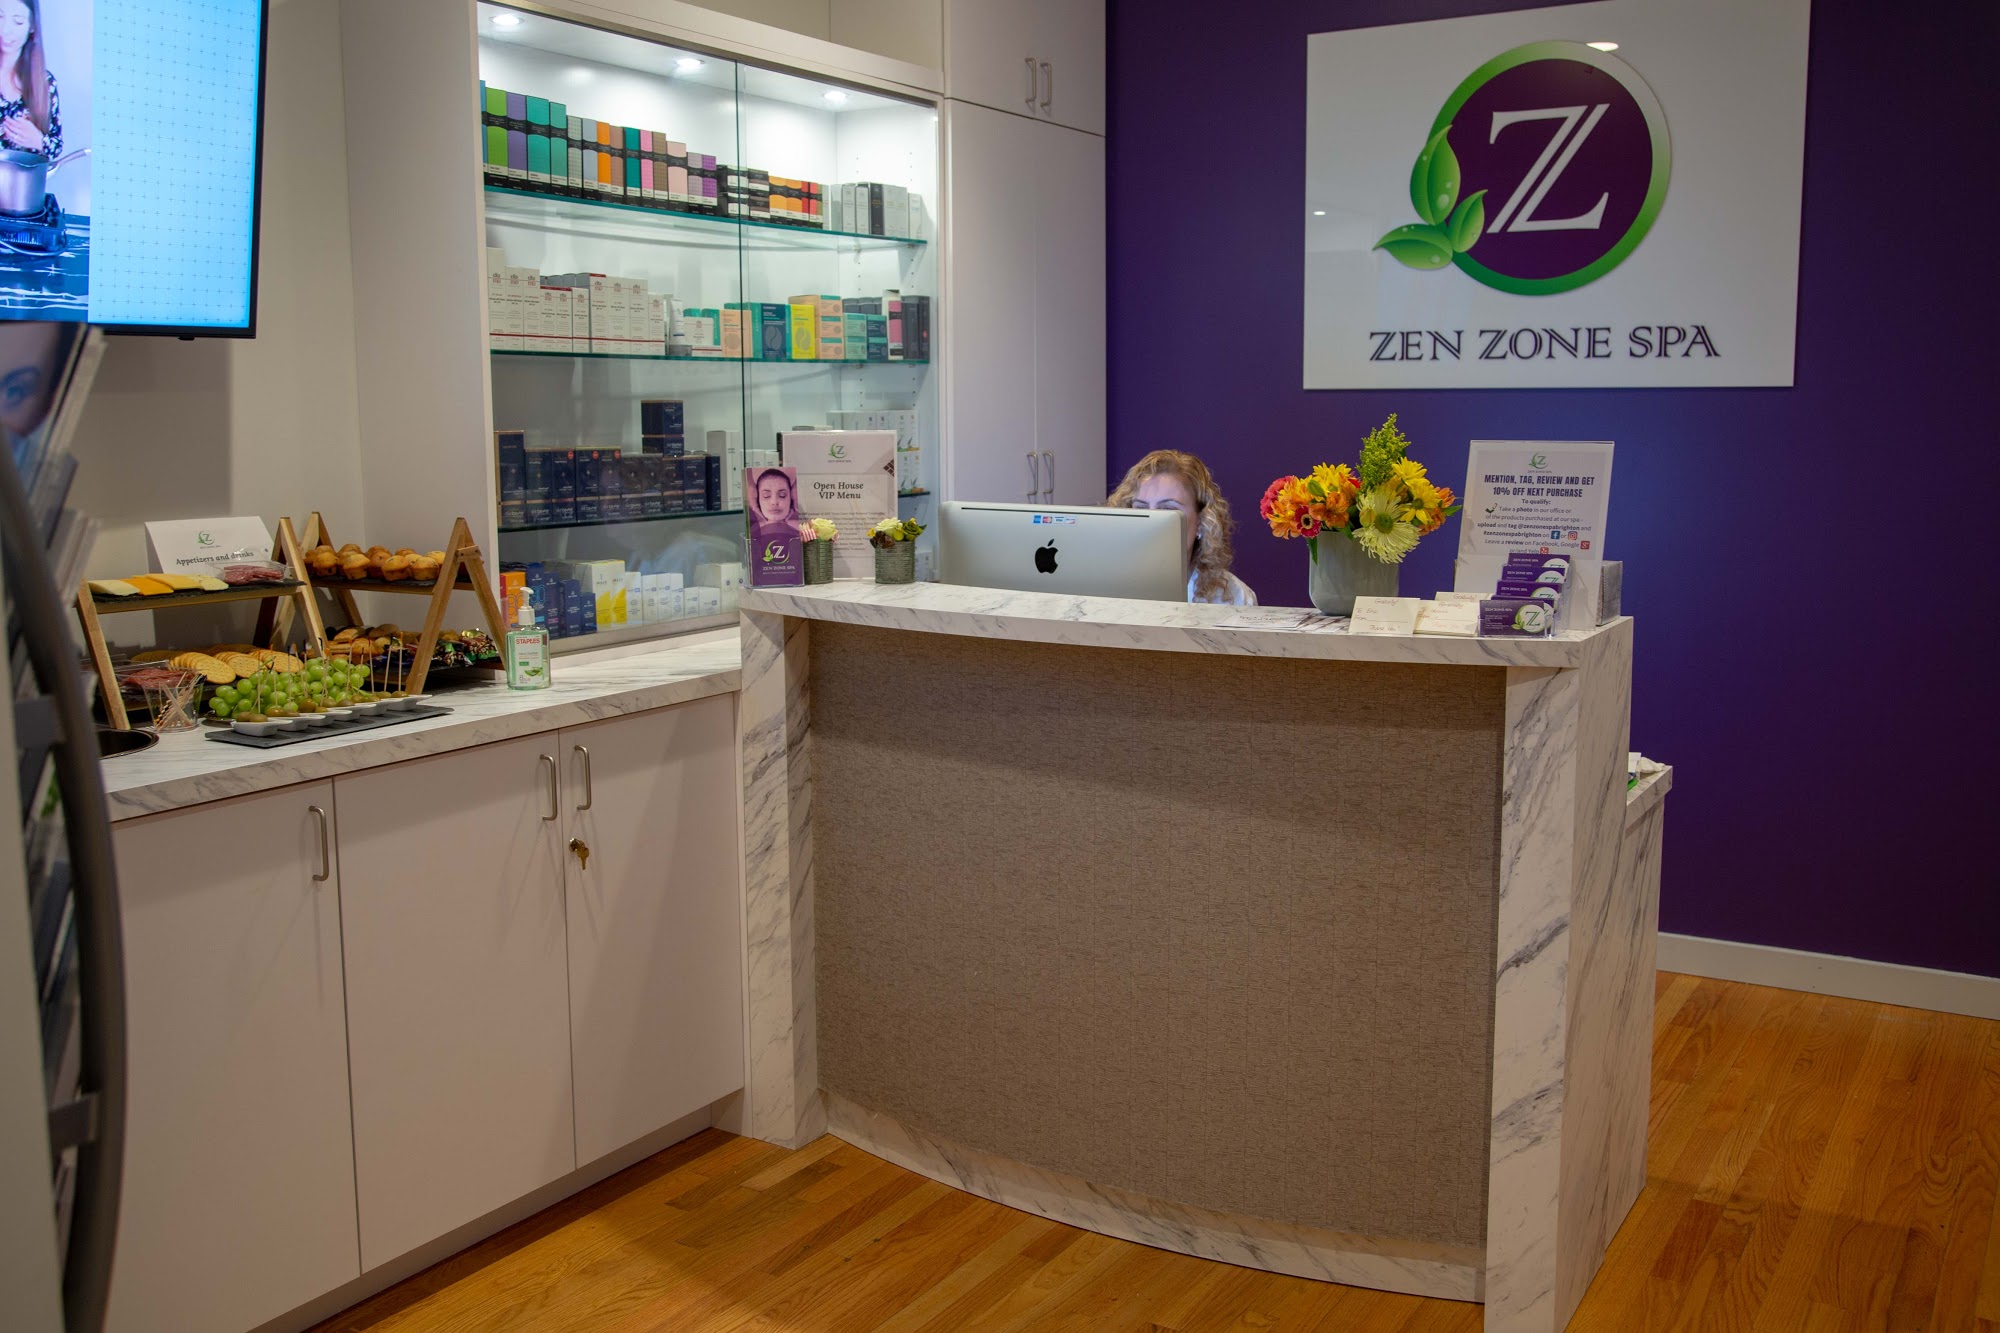 Zen Zone Spa